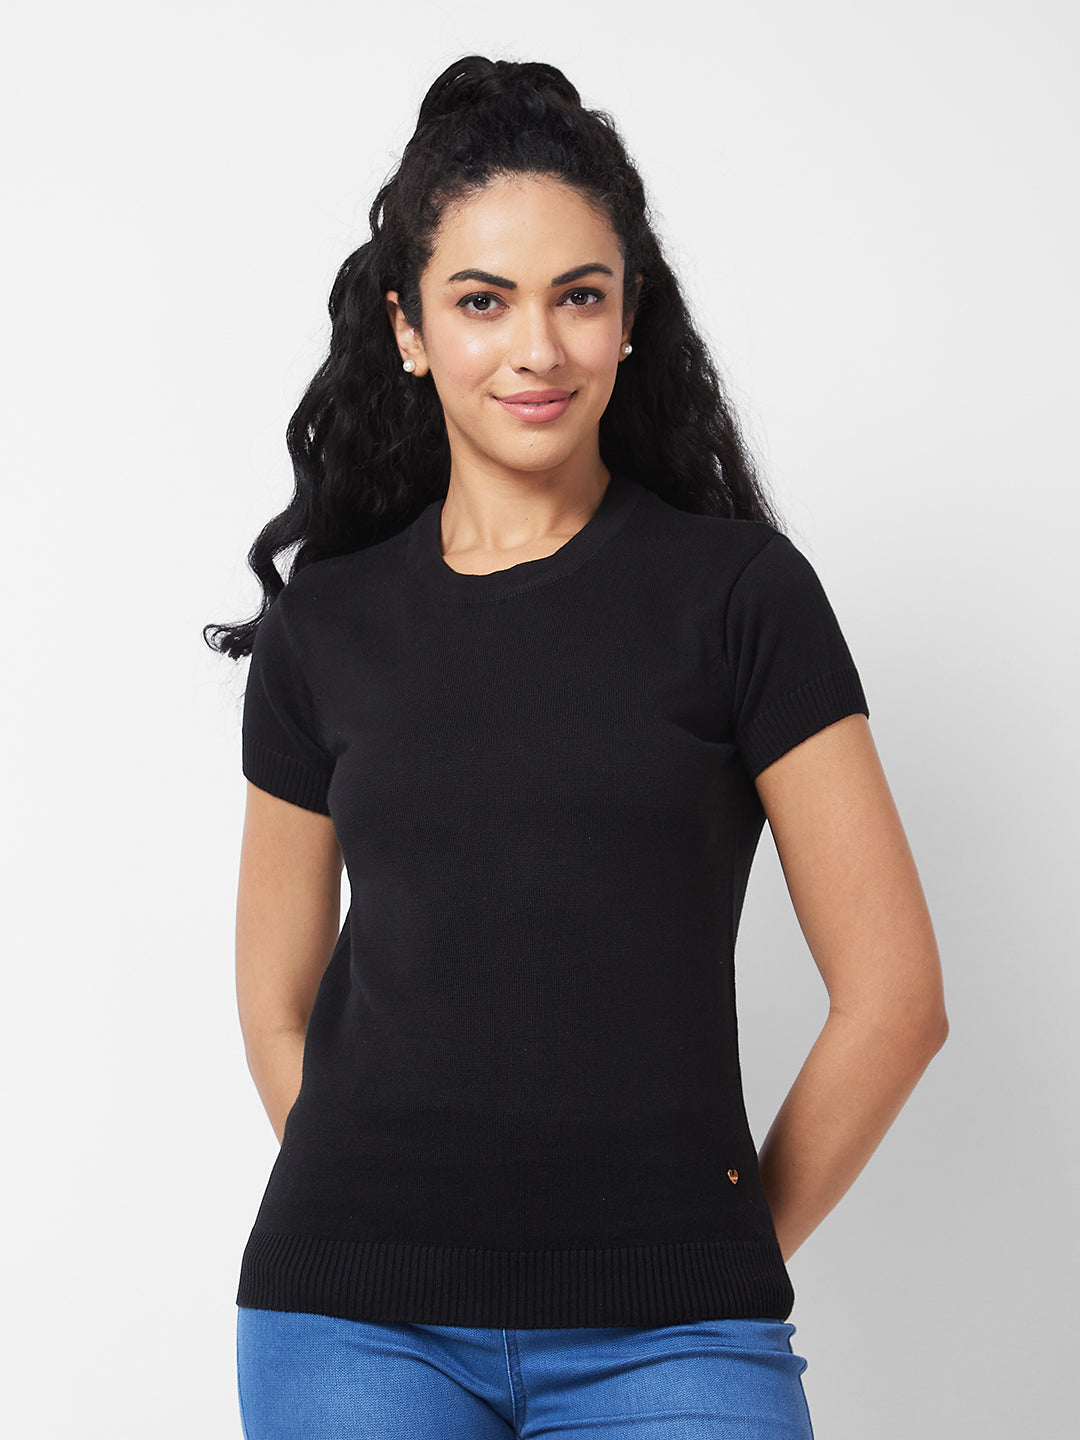 Spykar BLACK ROUND NECK Flat Knit T-shirt For Women